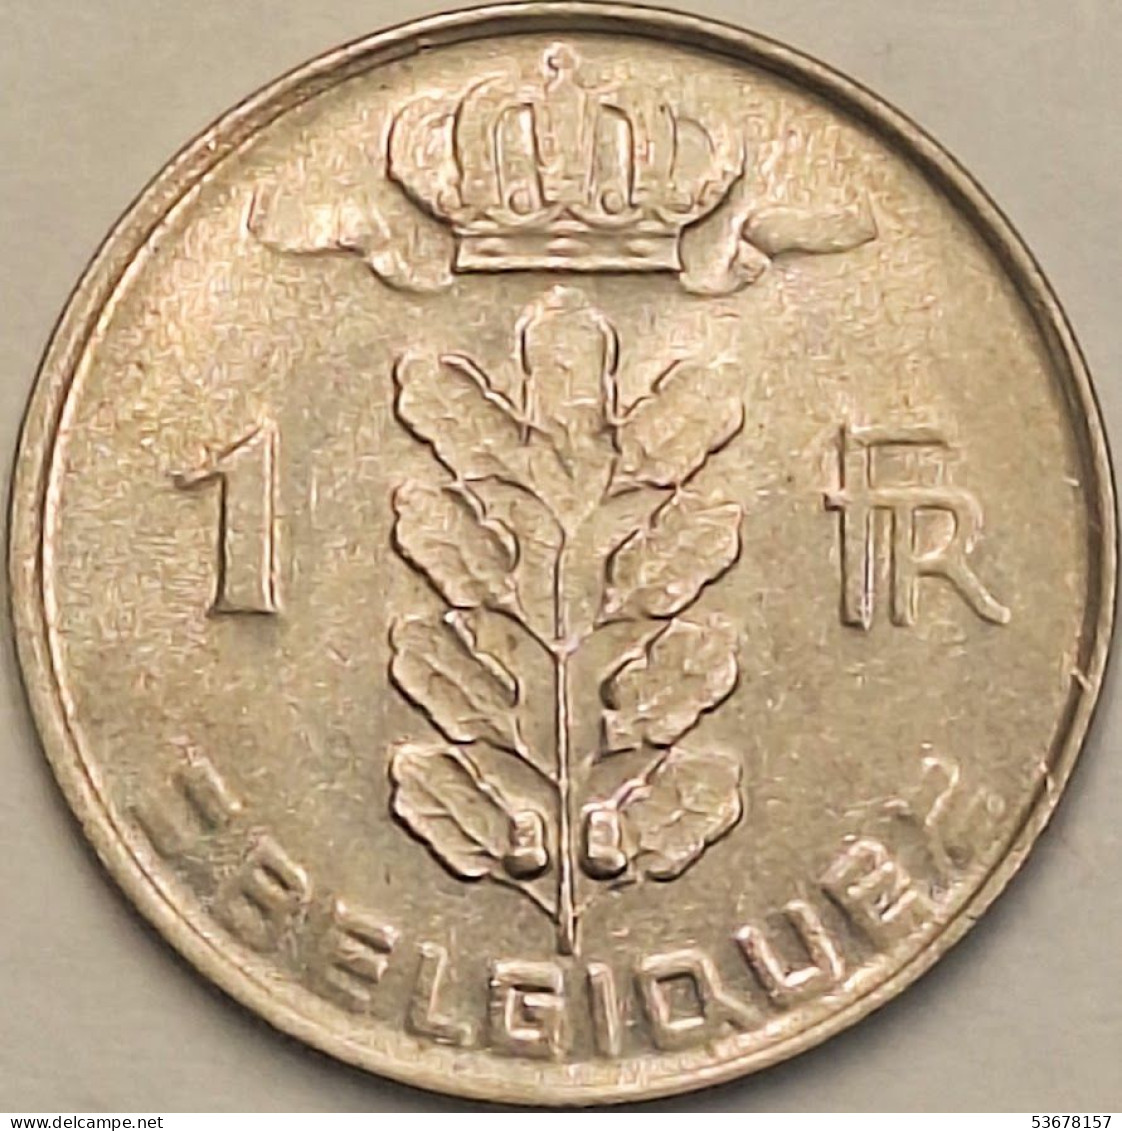 Belgium - Franc 1967, KM# 142.1 (#3115) - 1 Franc